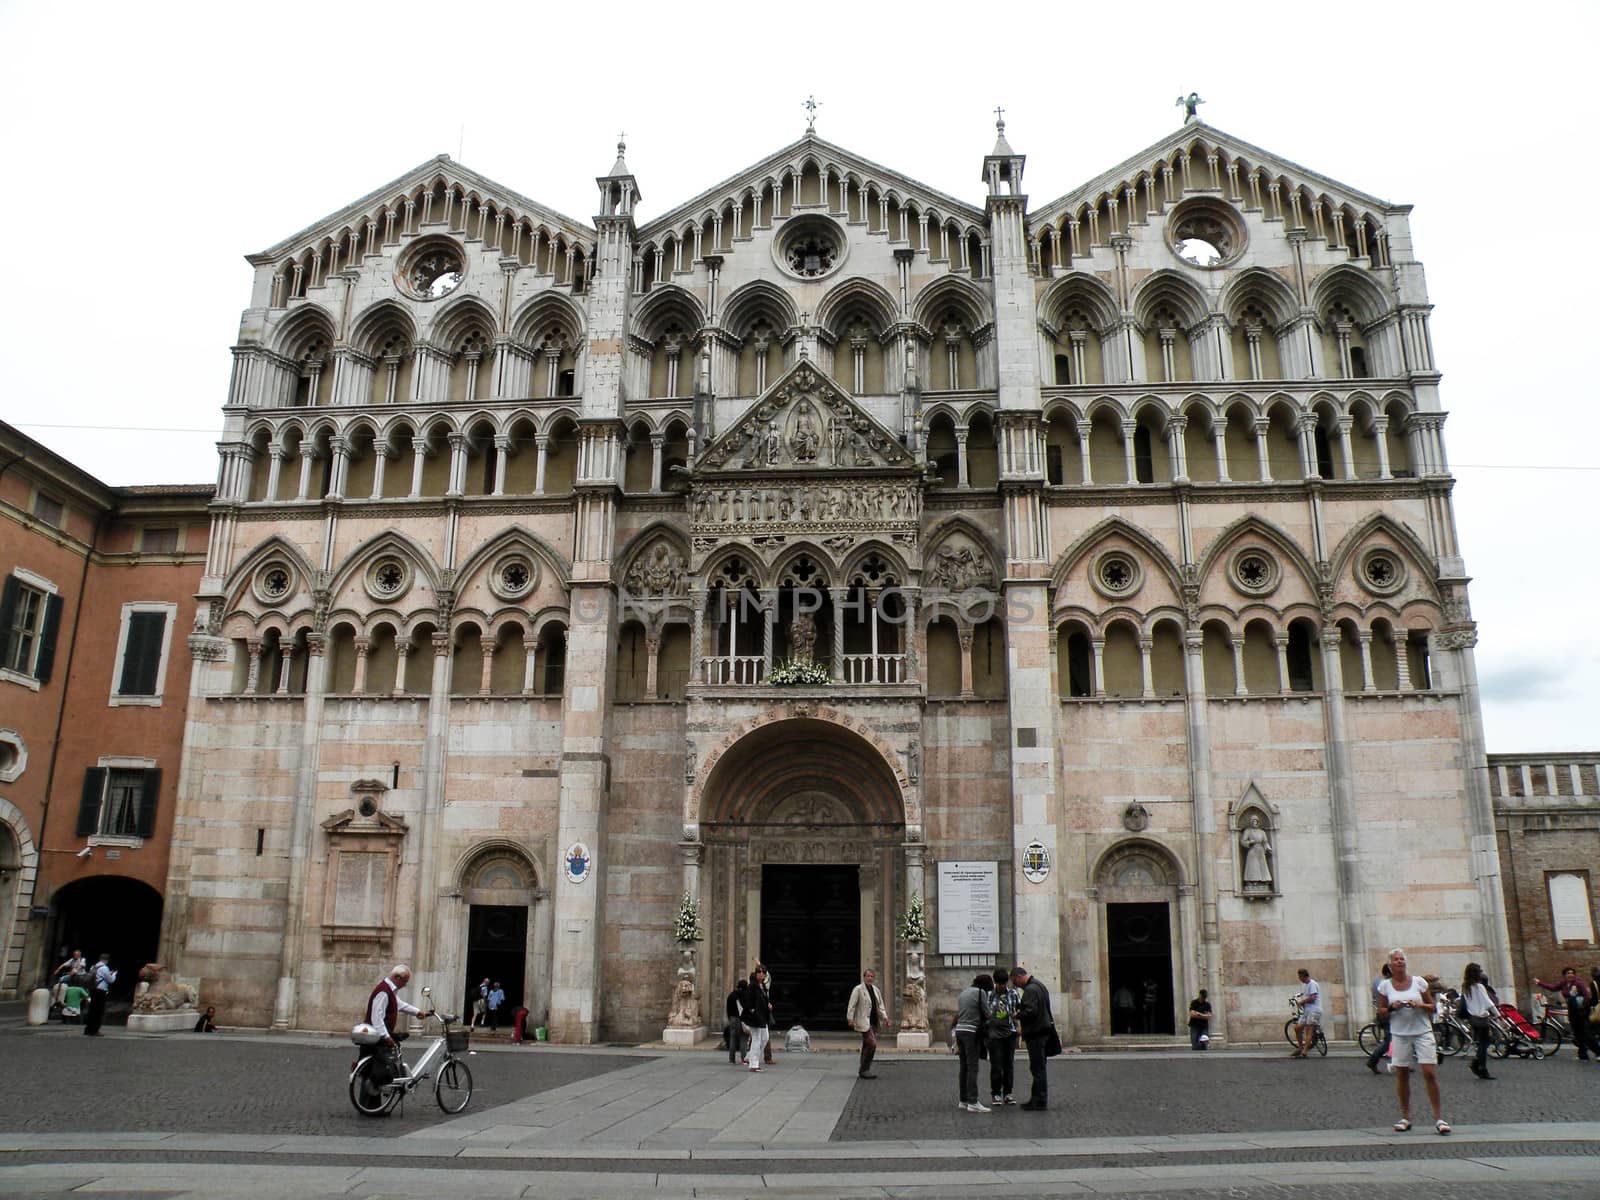 San Giorgio Cathedral, Ferrara, Emilia Romagna - Italy by cosca